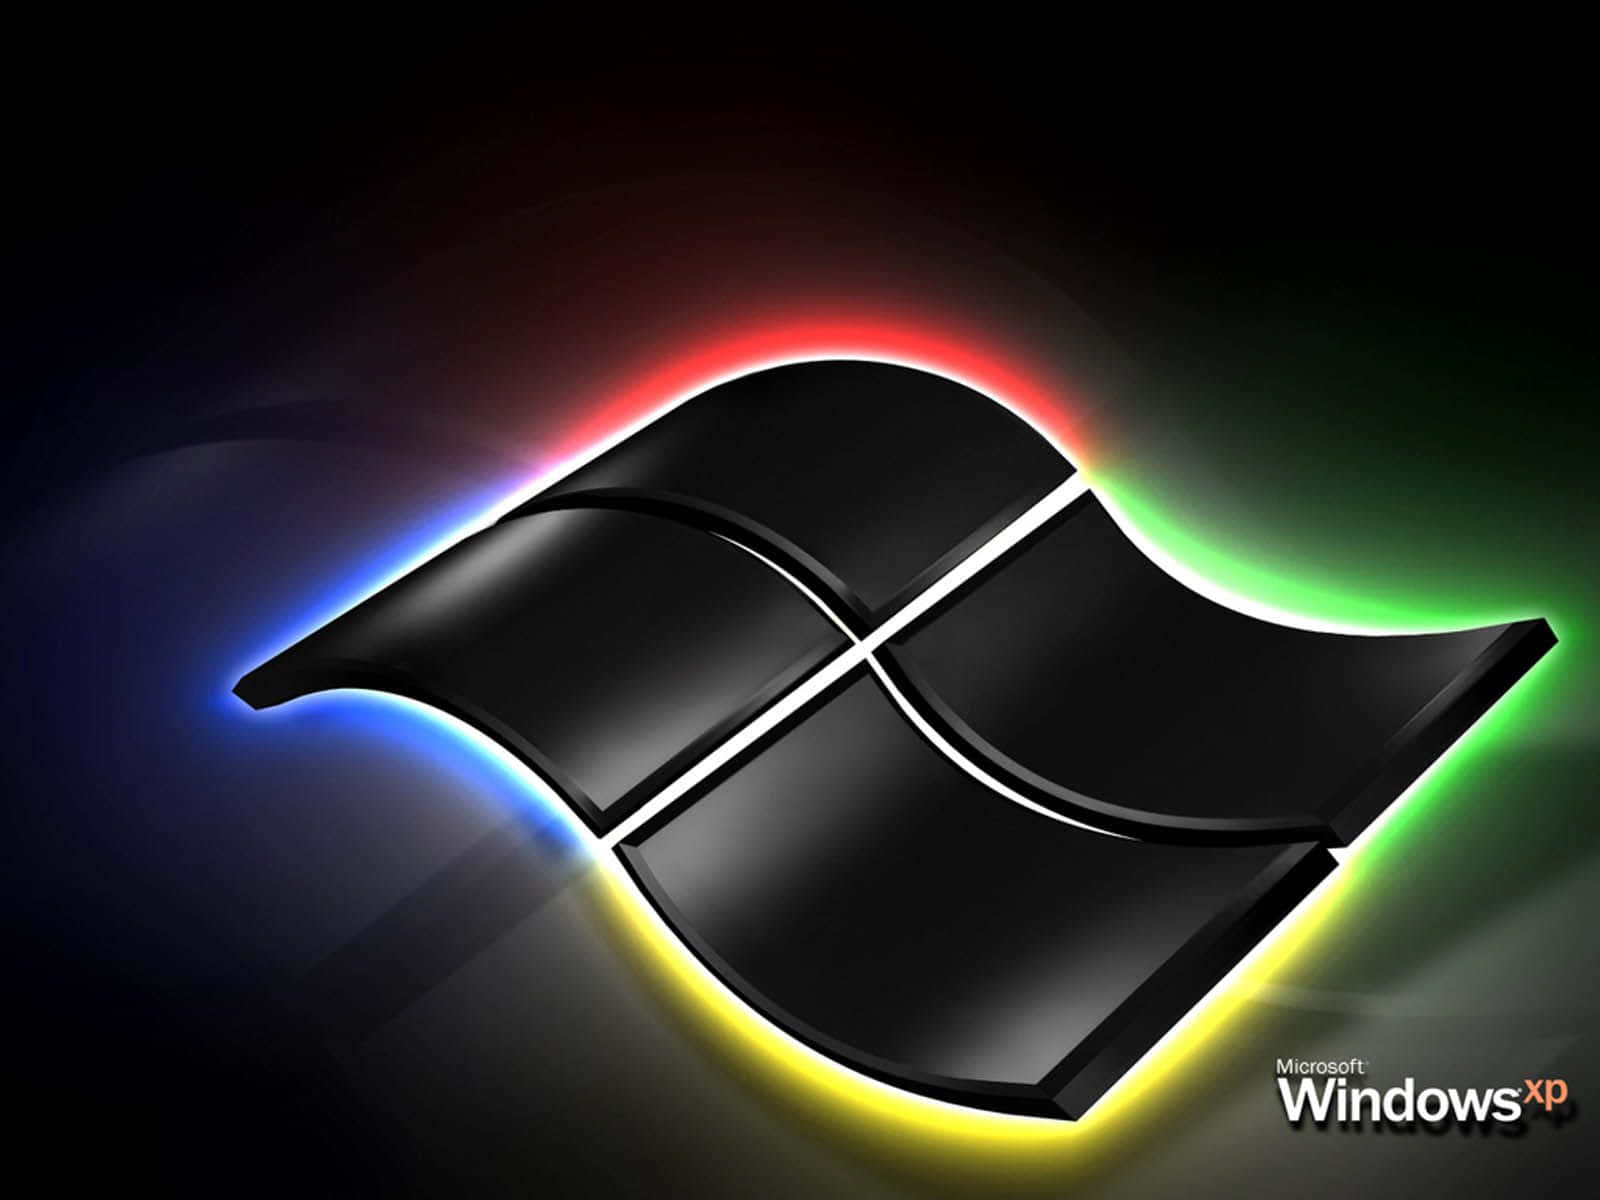 Windows 7 Logo With A Rainbow Colored Light